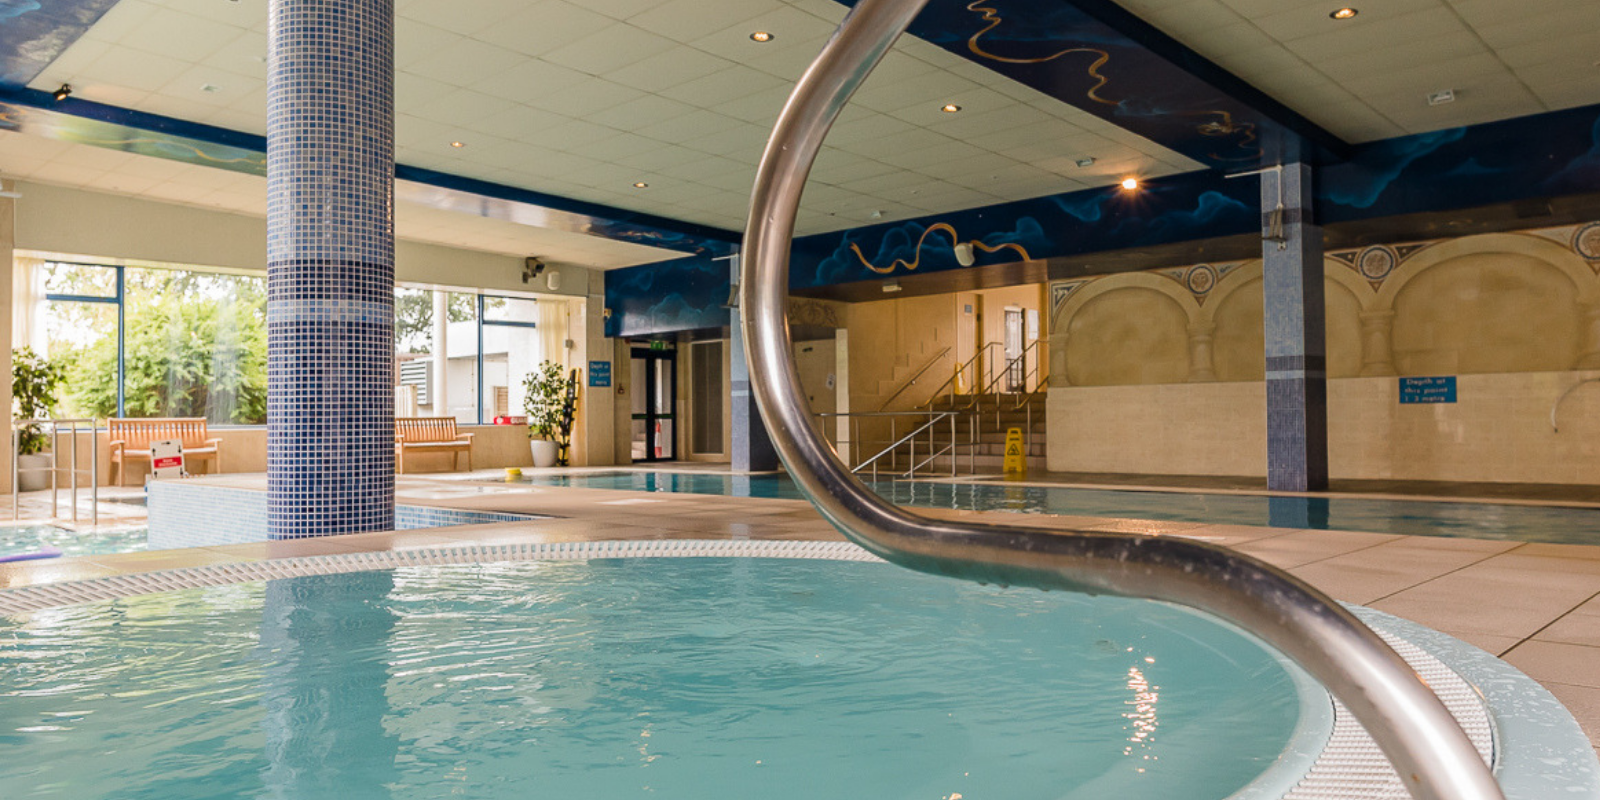 Award winning pool and leisure facilities